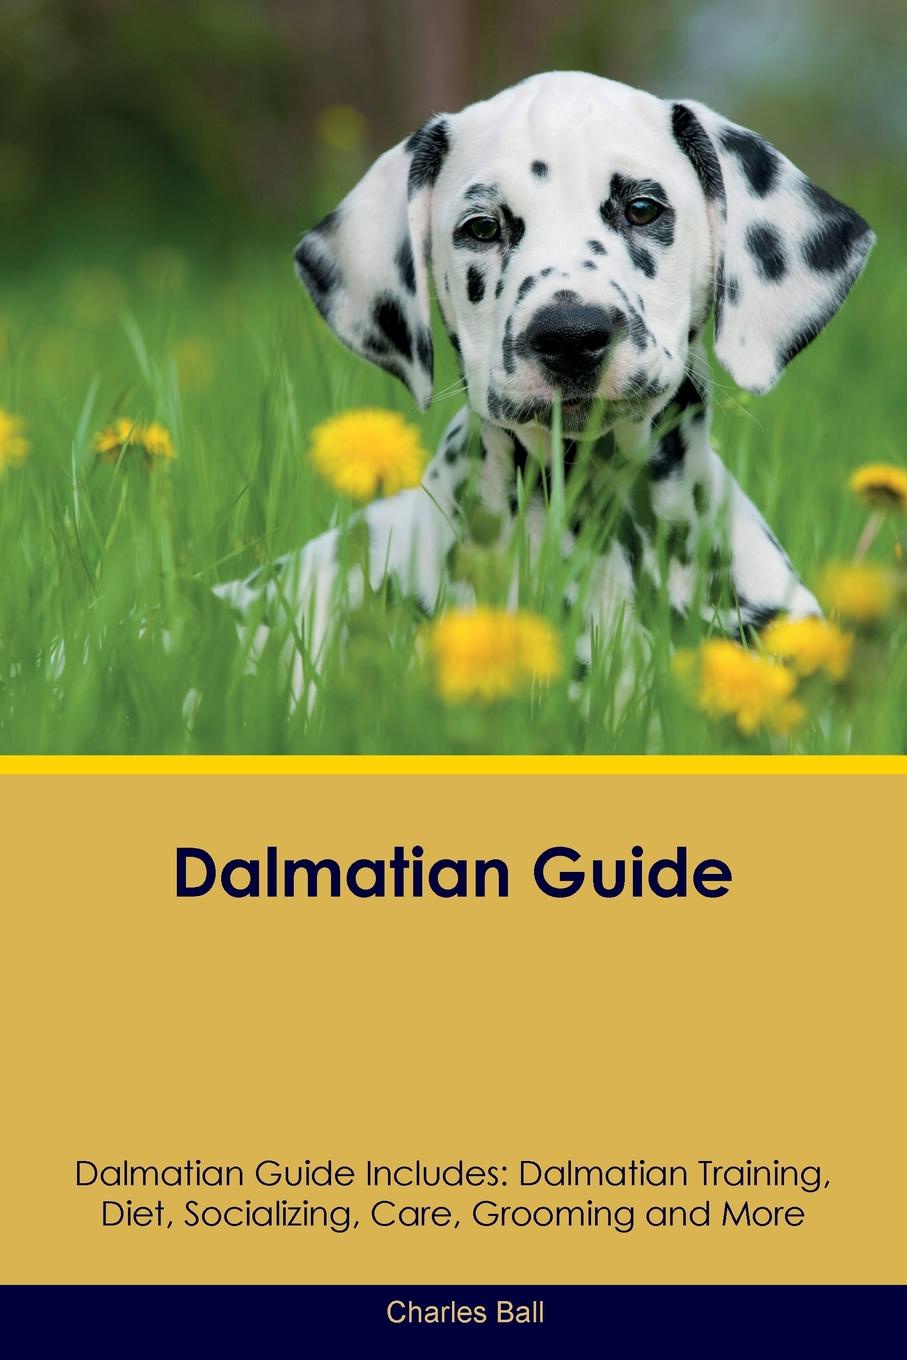 Dalmatian Guide Dalmatian Guide Includes. Dalmatian Training, Diet, Socializing, Care, Grooming, Breeding and More